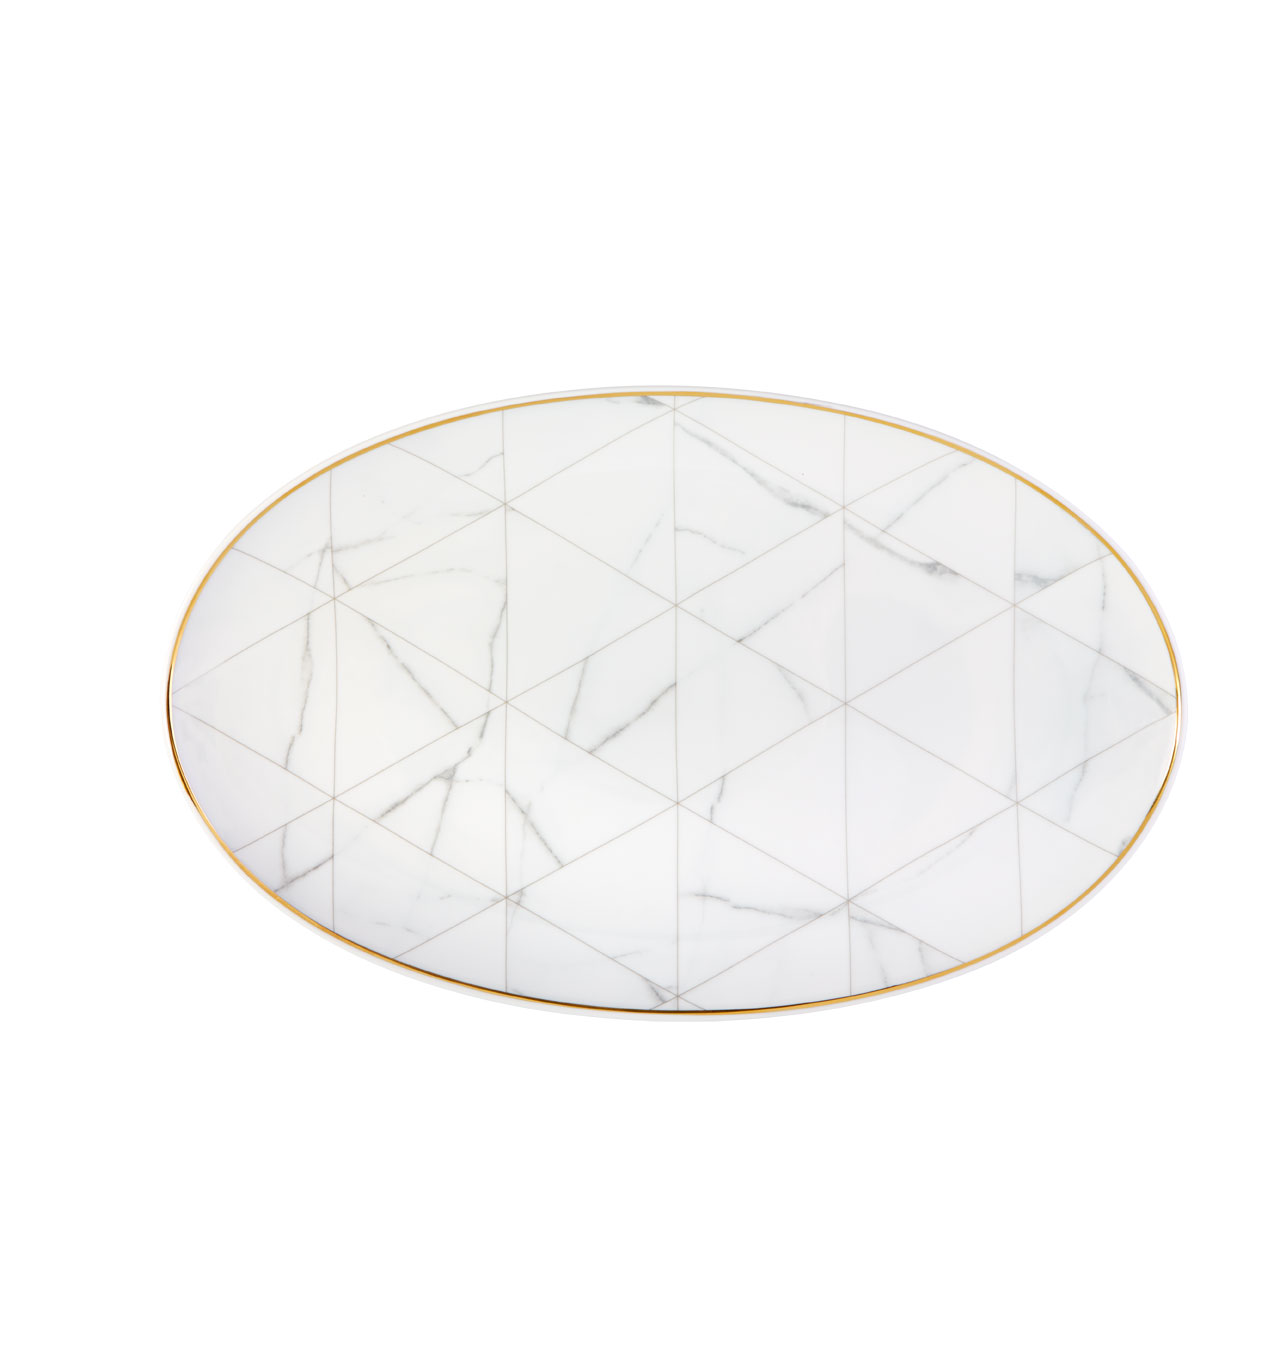 Vista Alegre Collection Carrara large oval platter